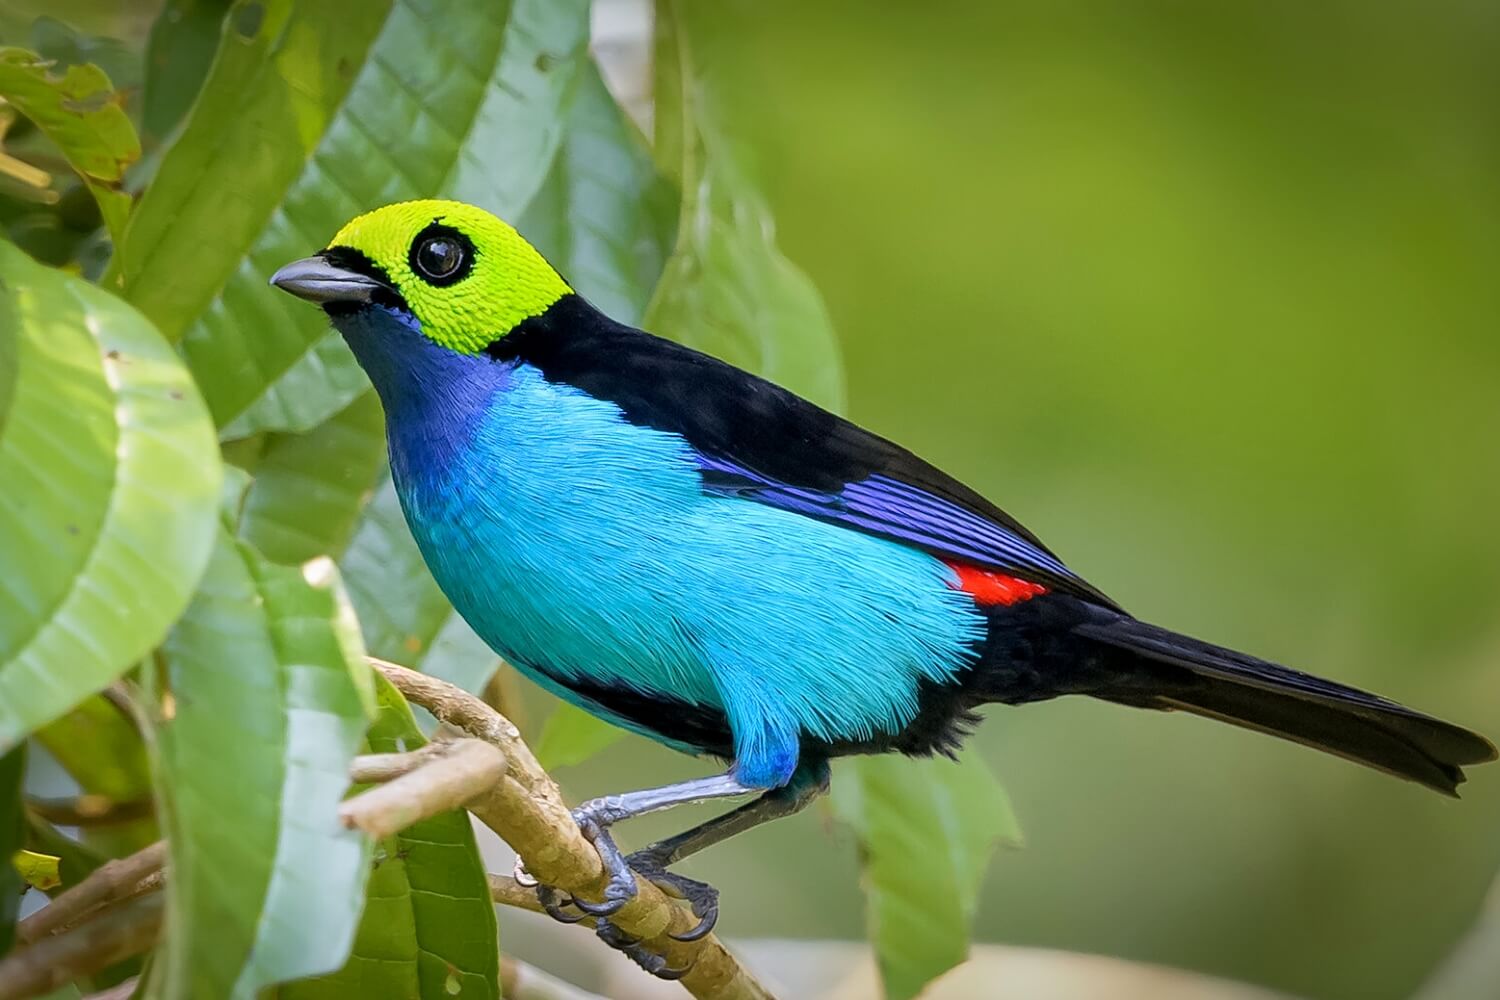 The Peruvian Amazon paradise for bird watching